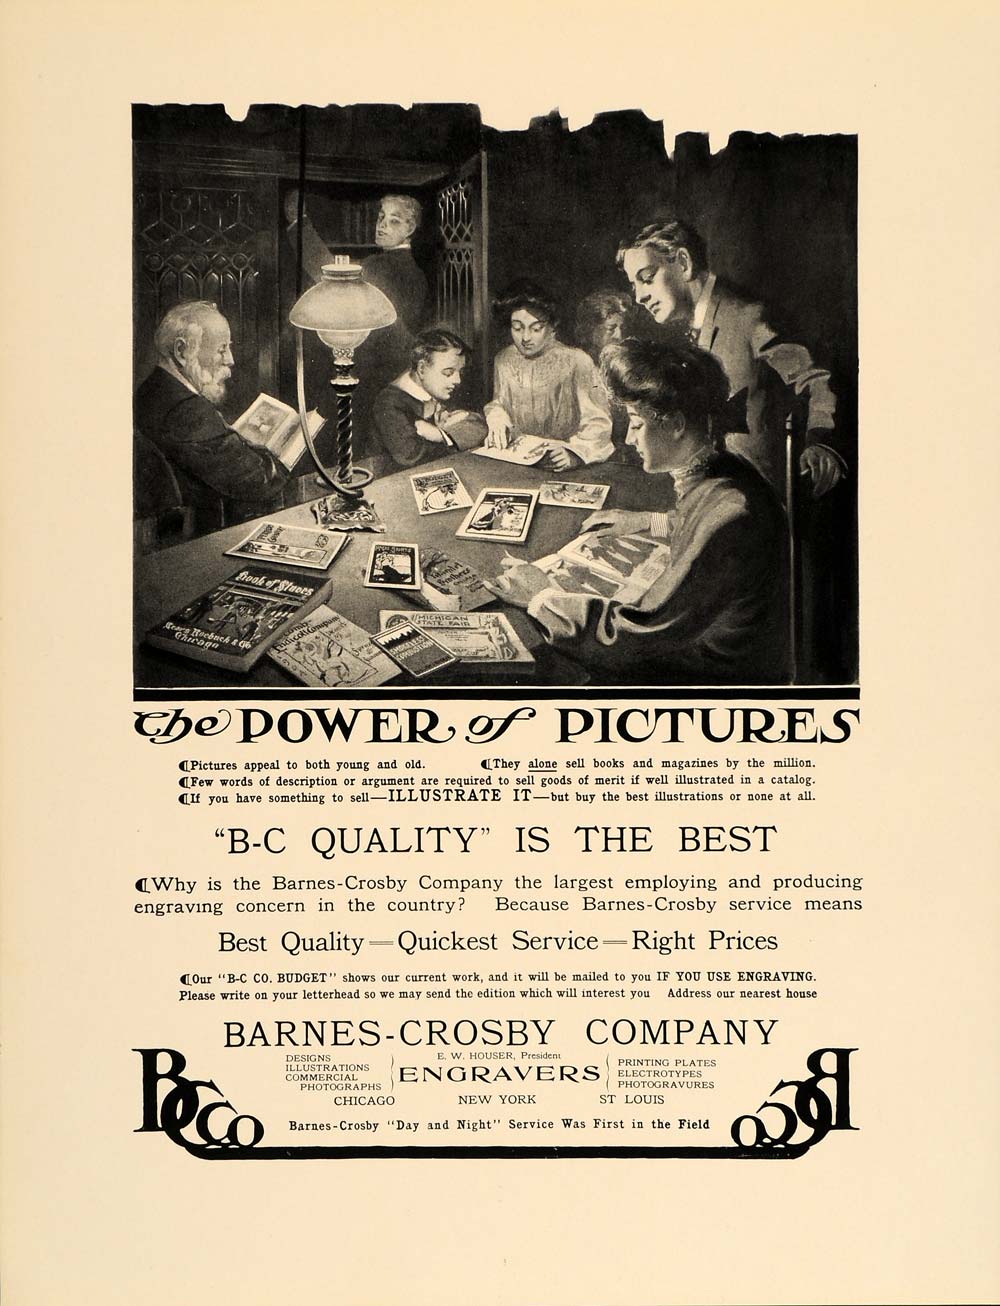 1907 Print Ad Barnes-Crosby Company Engravers Pictures - ORIGINAL GAC2